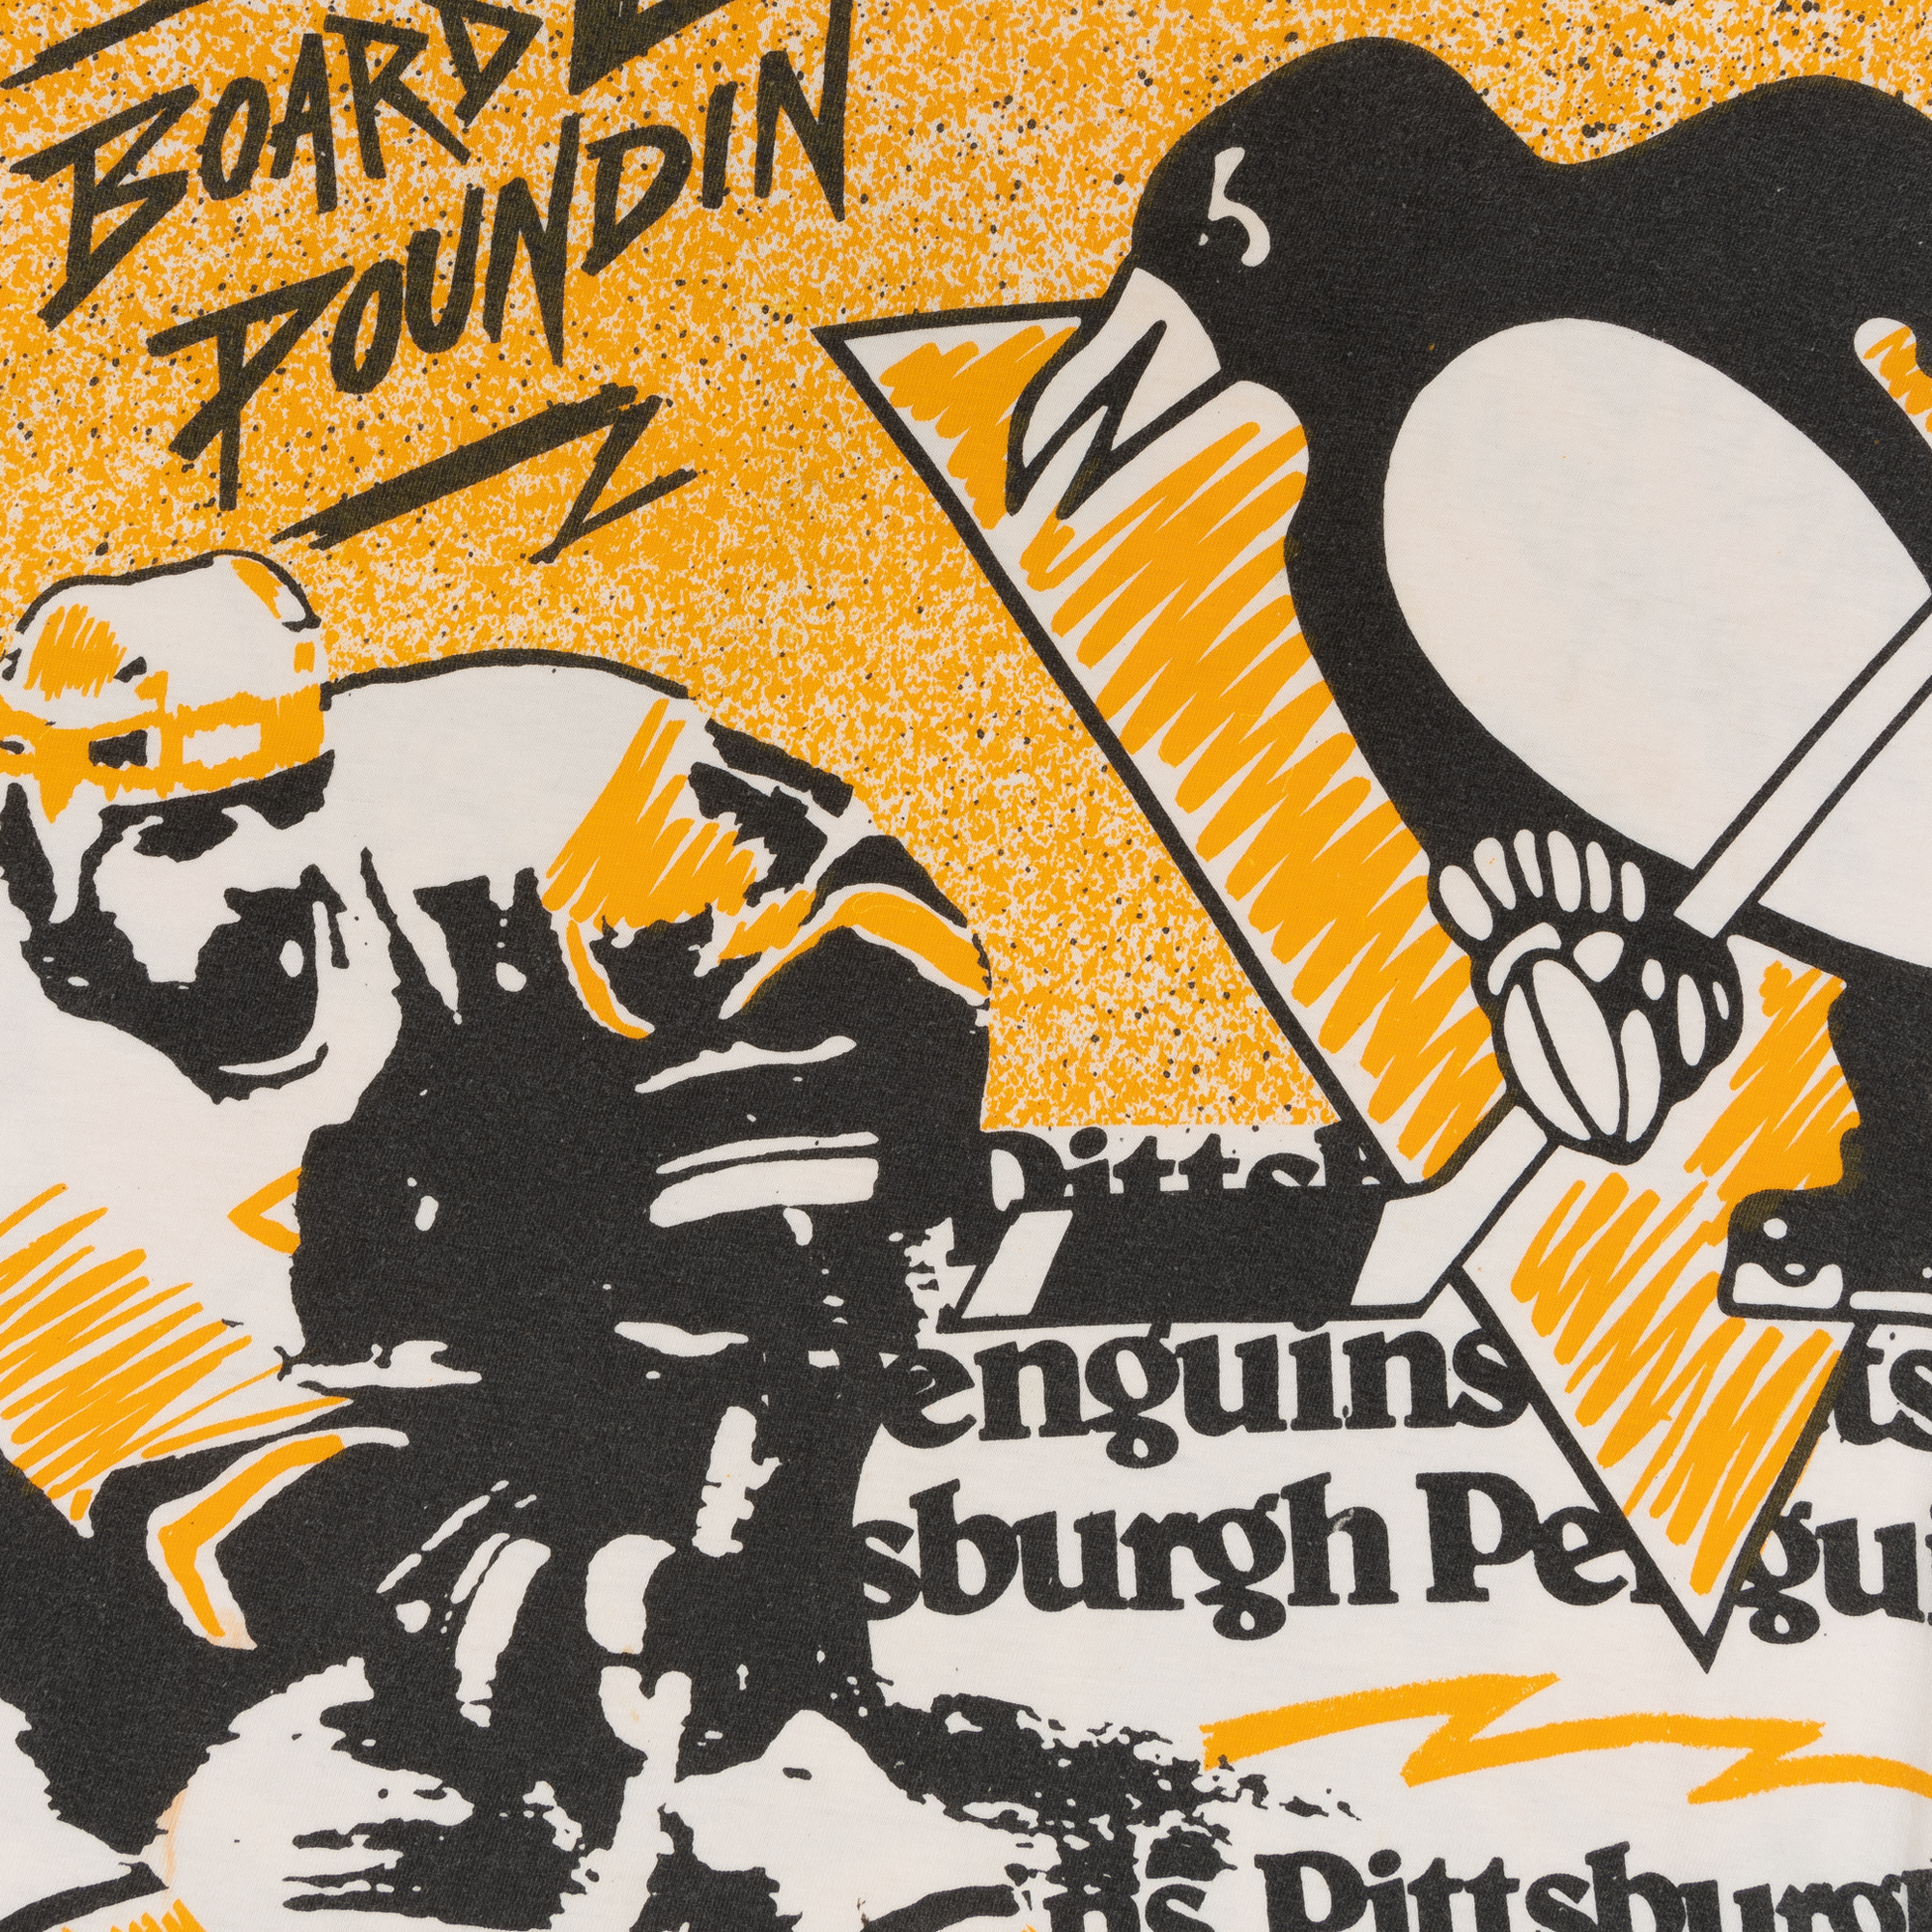 Pittsburgh Penguins AOP Magic Johnson Ts Tee Yellow-PLUS